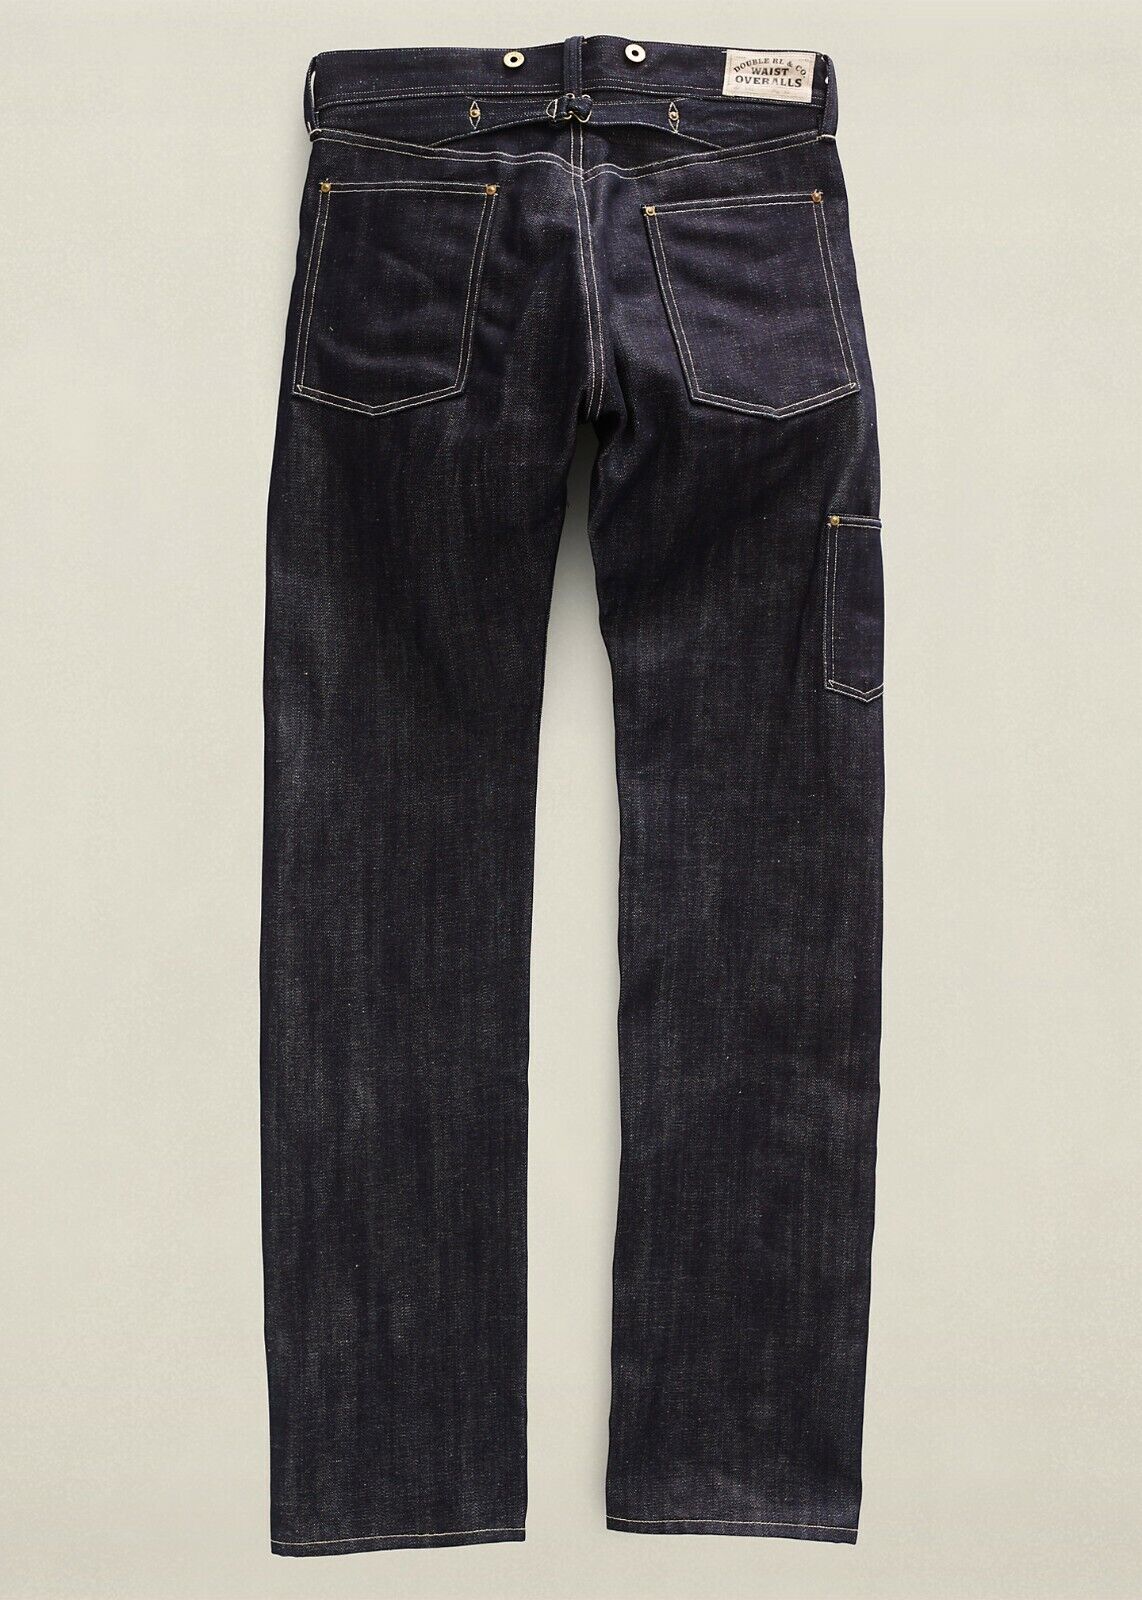 RRL Double RL Dark Wash Raw Denim Jeans Selvedge Carpenter Men's 40 x ...